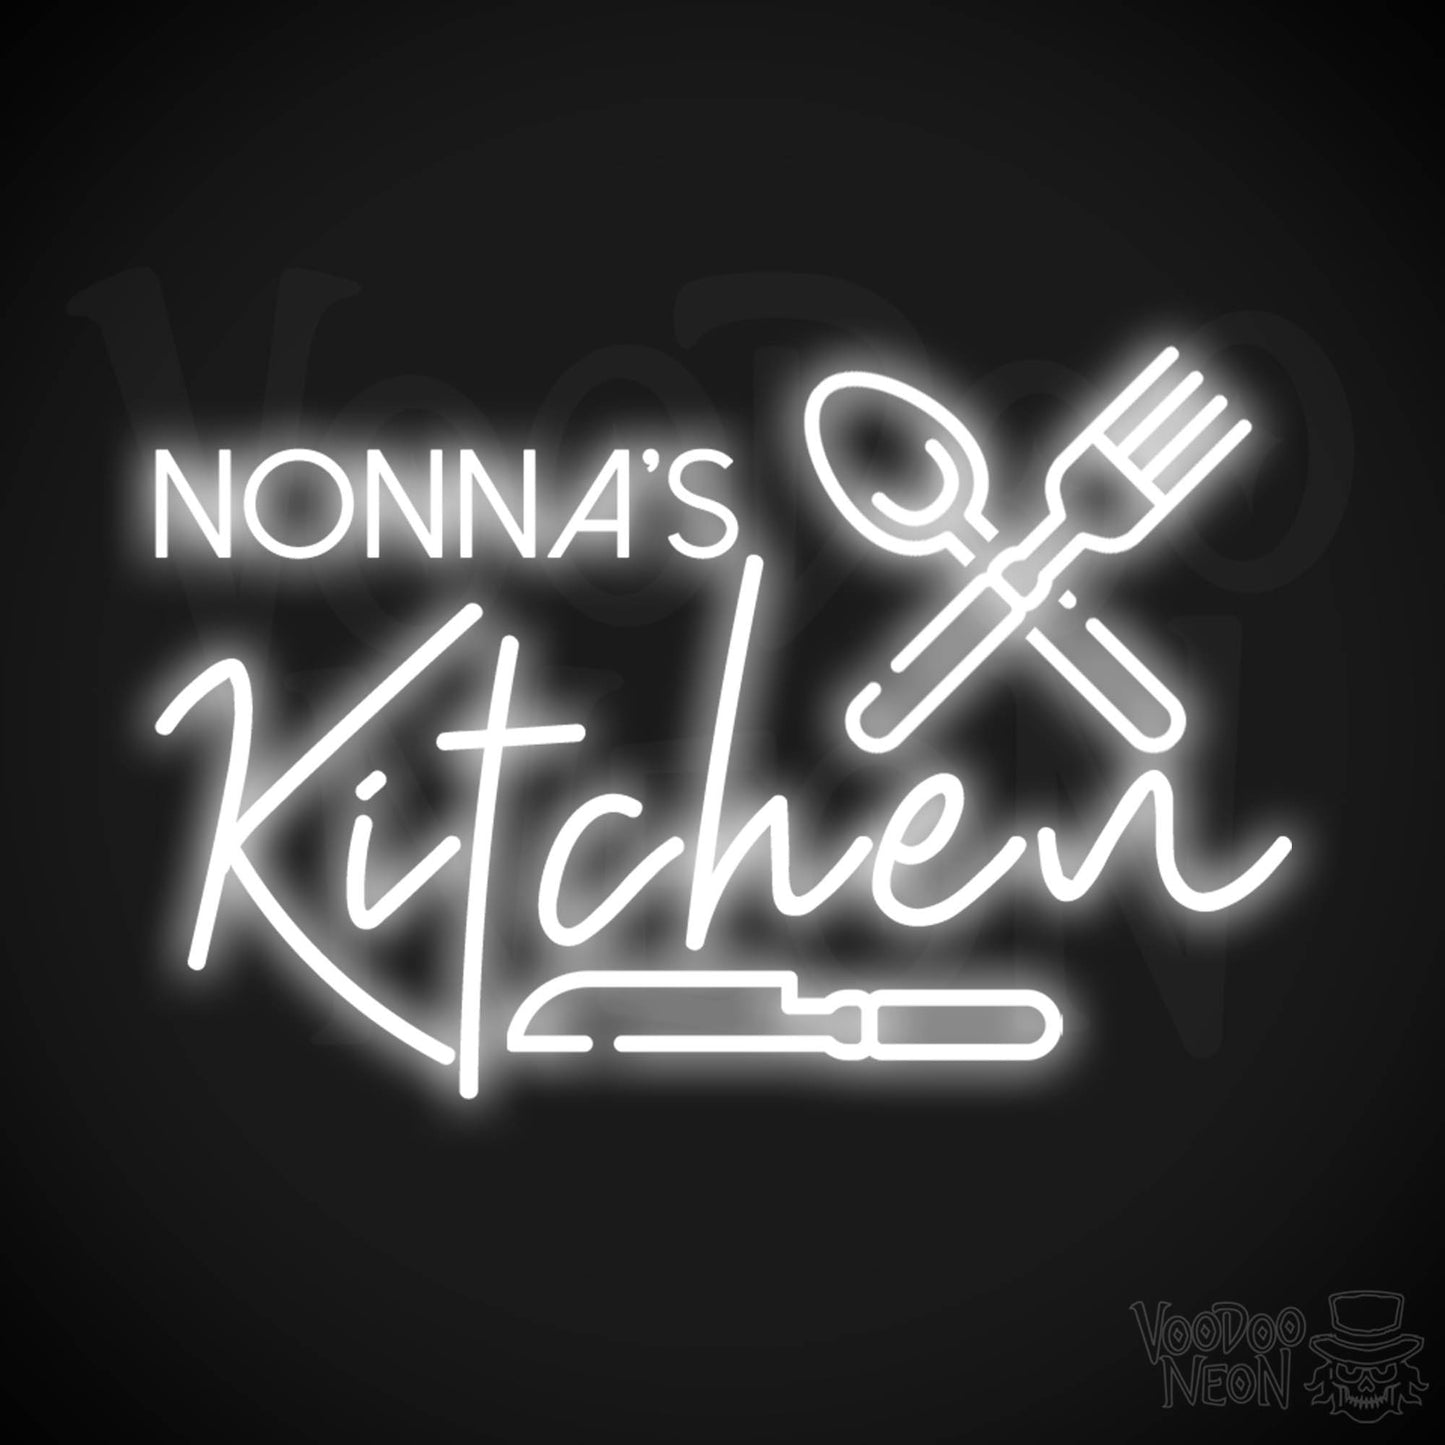 Nonna's Kitchen Neon Sign - Neon Nona's Kitchen Sign - Wall Art - Color White